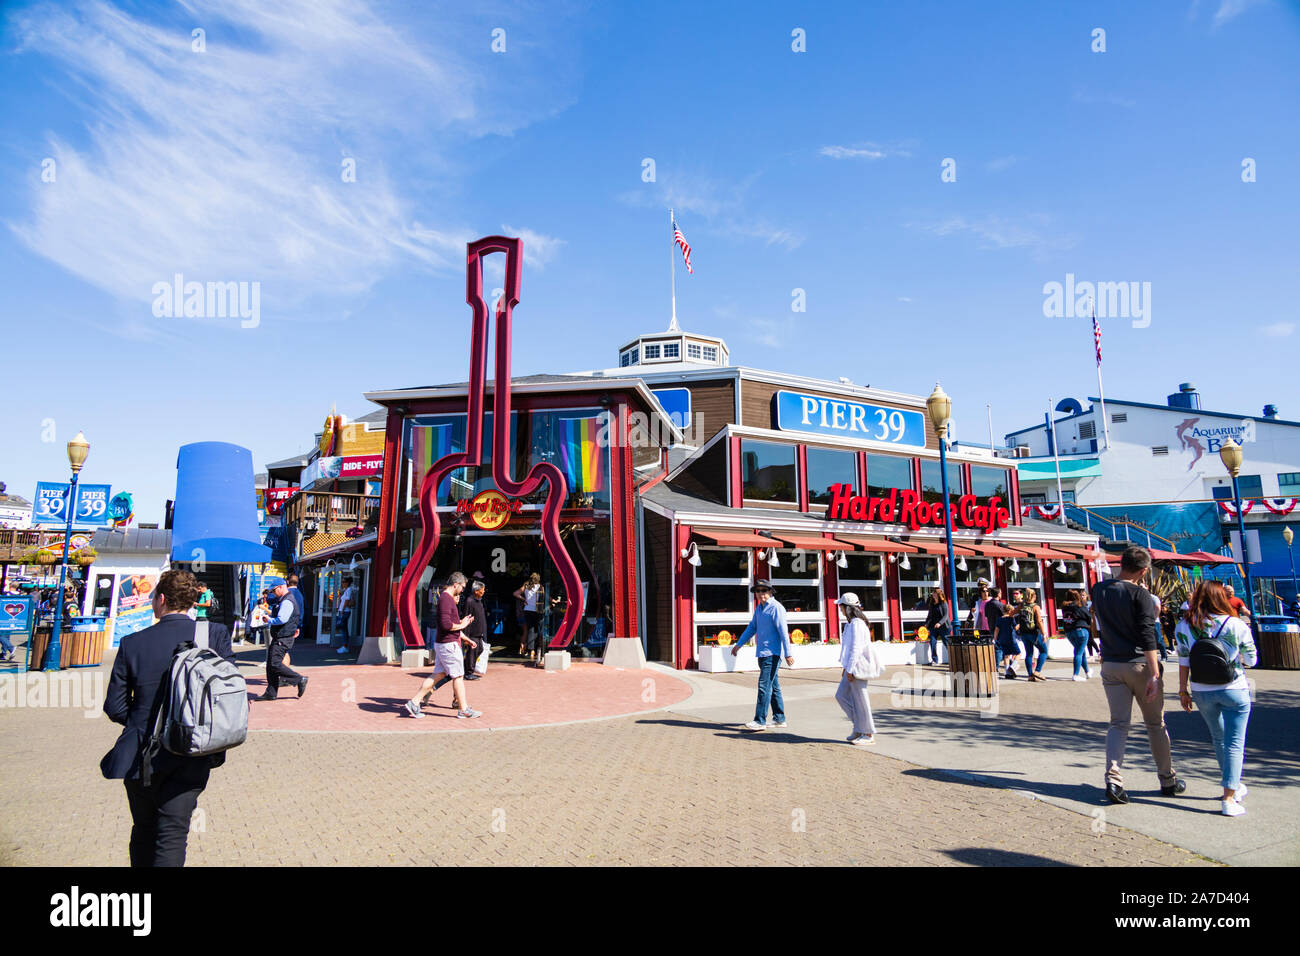 Hard Rock Cafe on Pier 39, Fishermans wharf, San Francisco, California United States of America Stock Photo